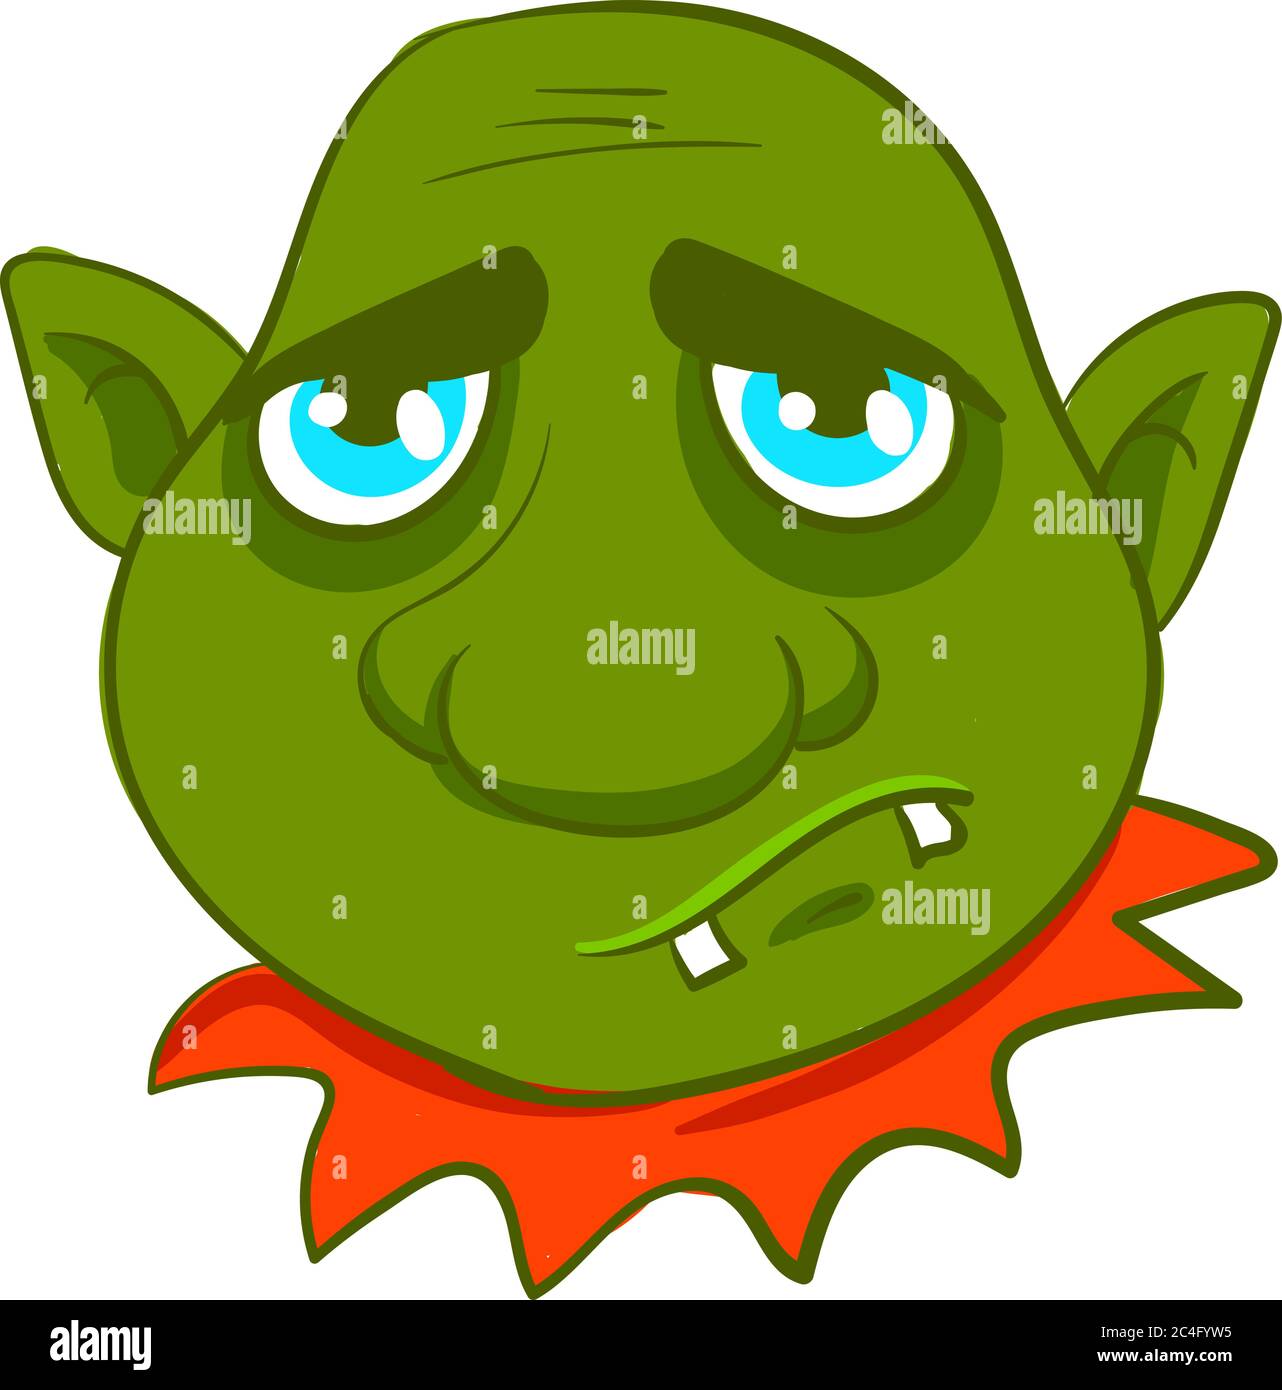 Troll Face Immagini e Fotos Stock - Alamy